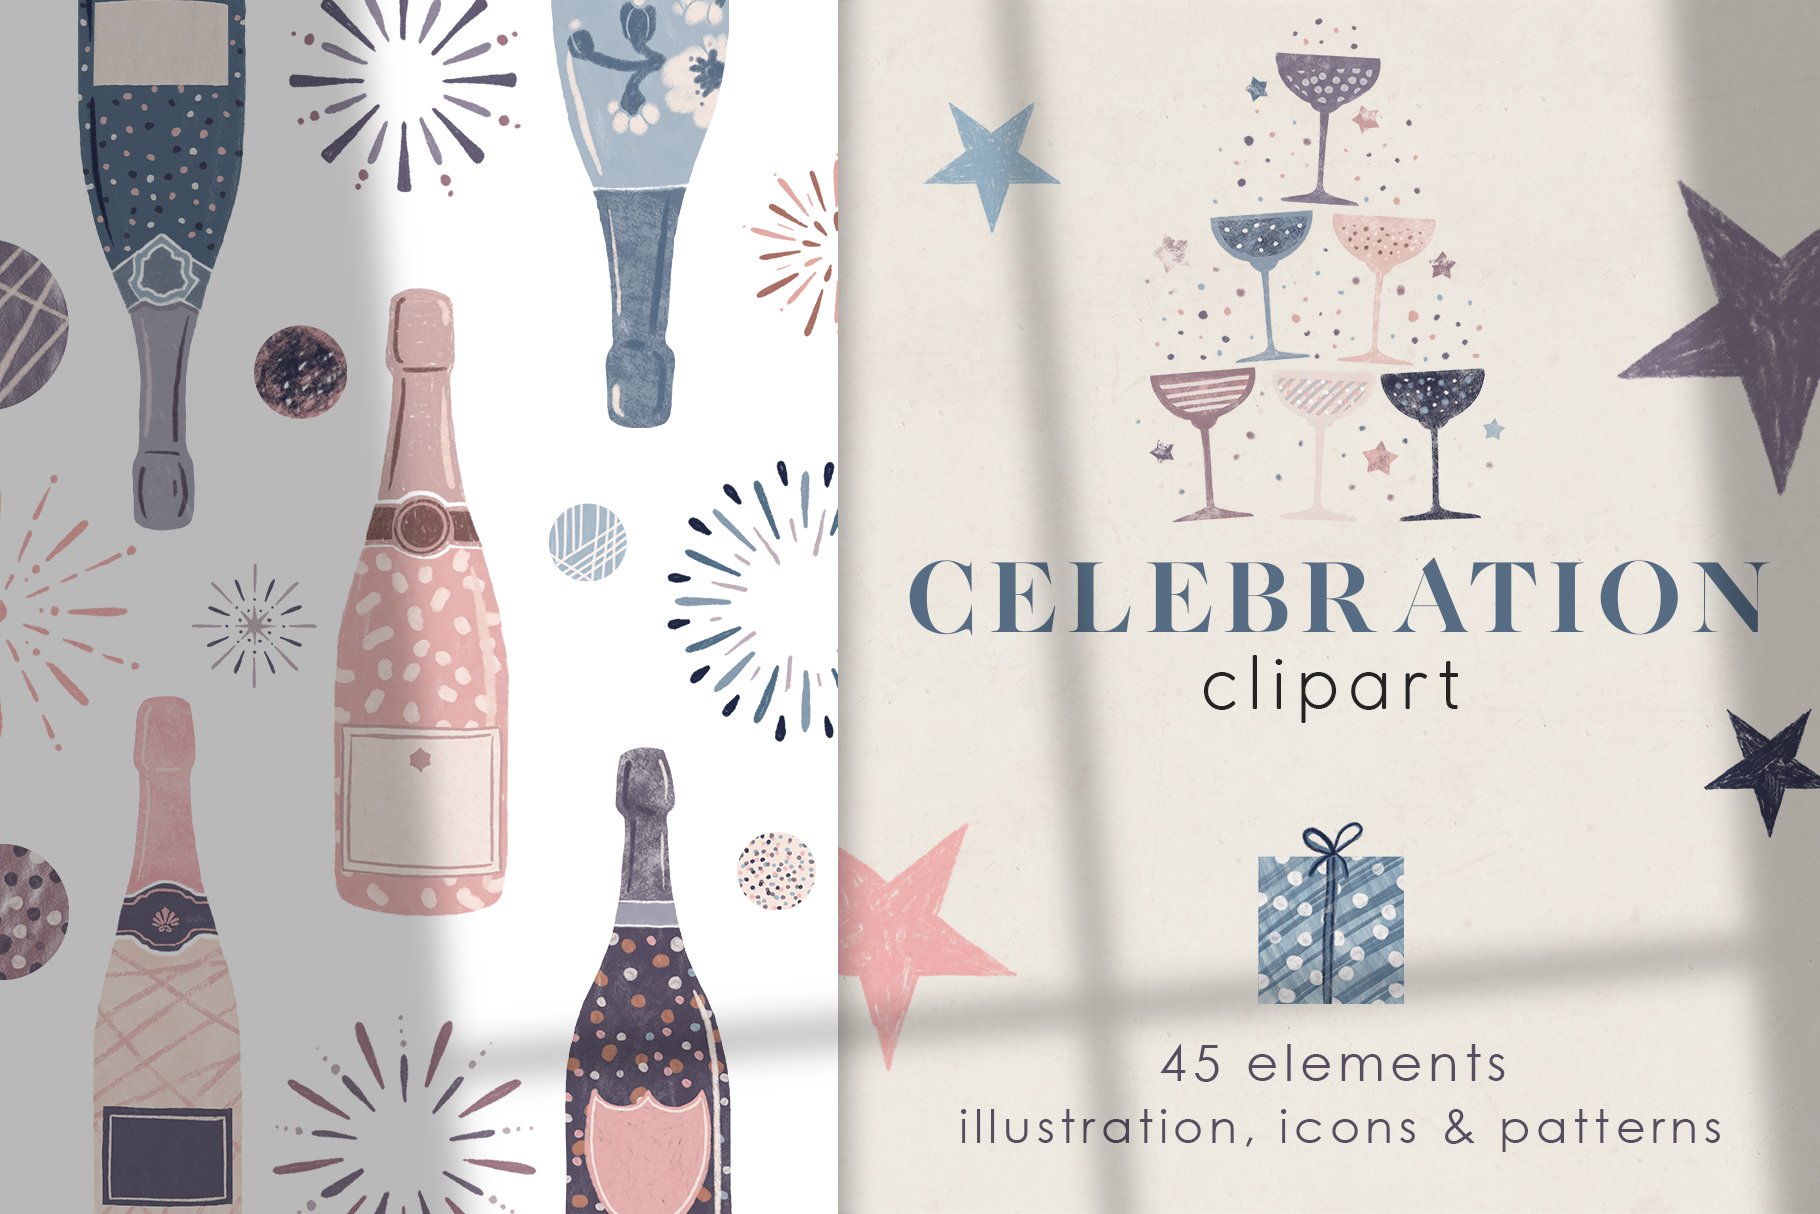 Champagne Celebration Clipart cover image.